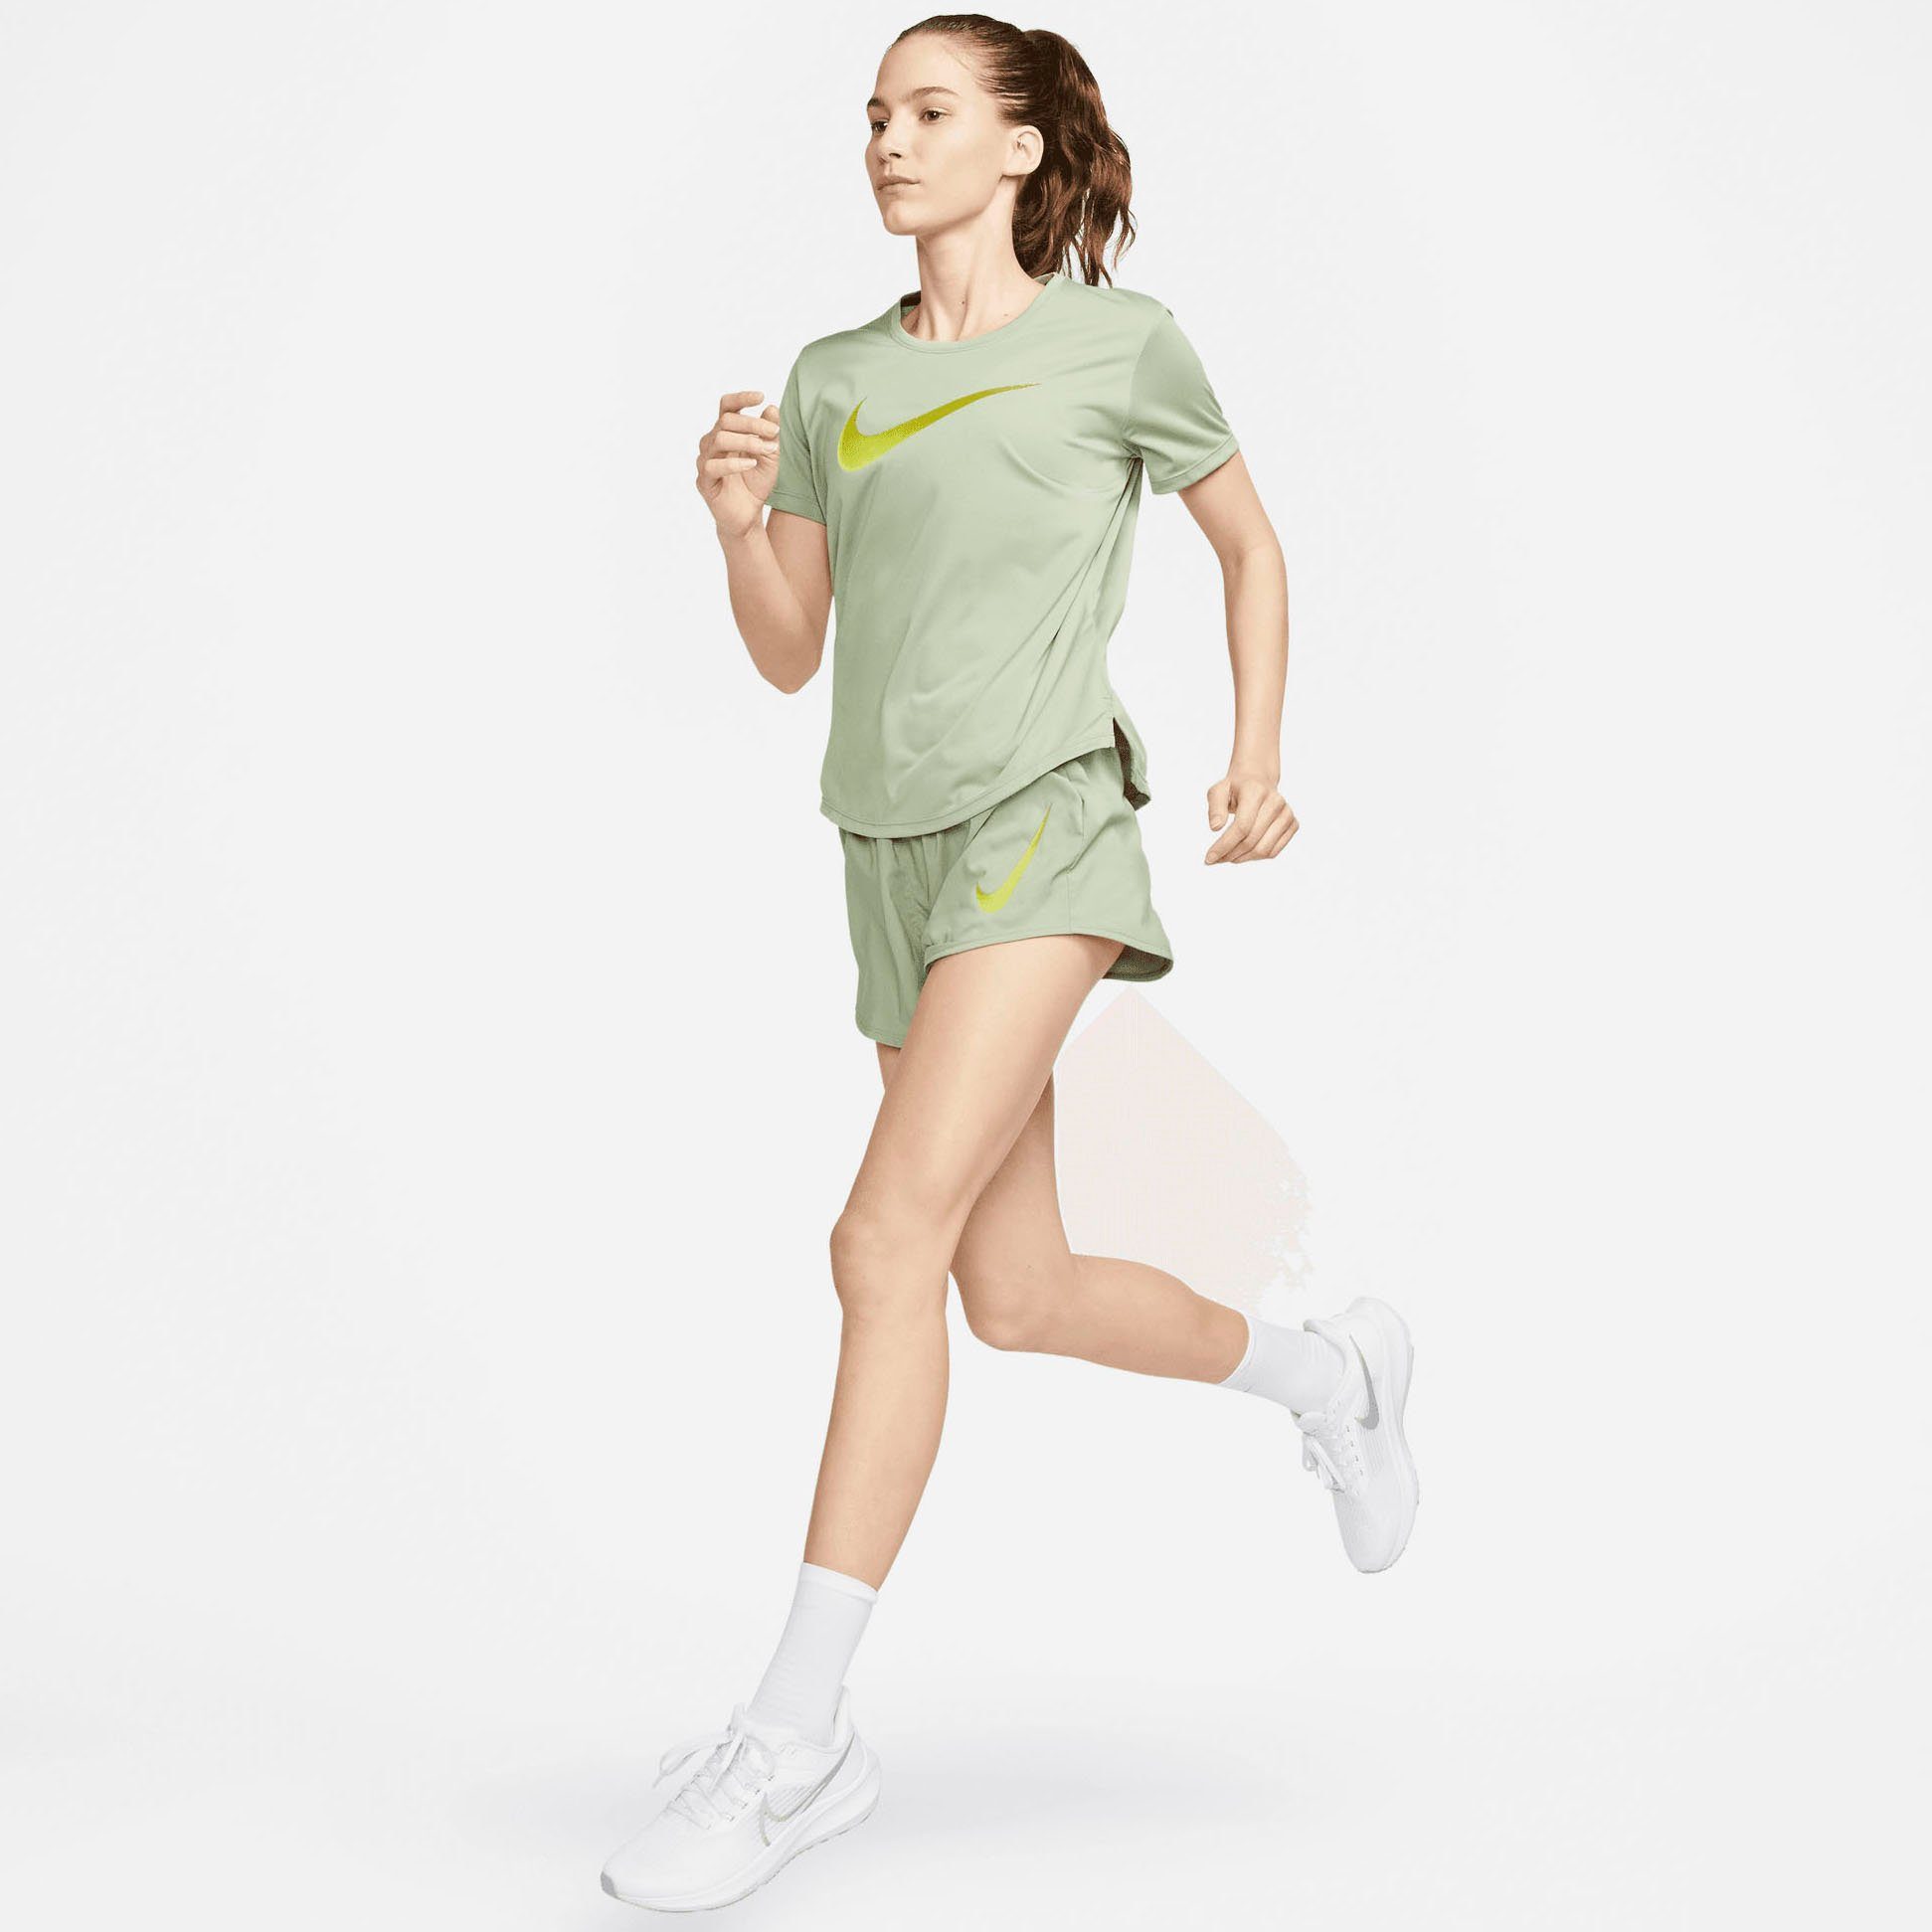 Nike Laufshirt One grün Swoosh Women's Top Short-Sleeved Dri-FIT